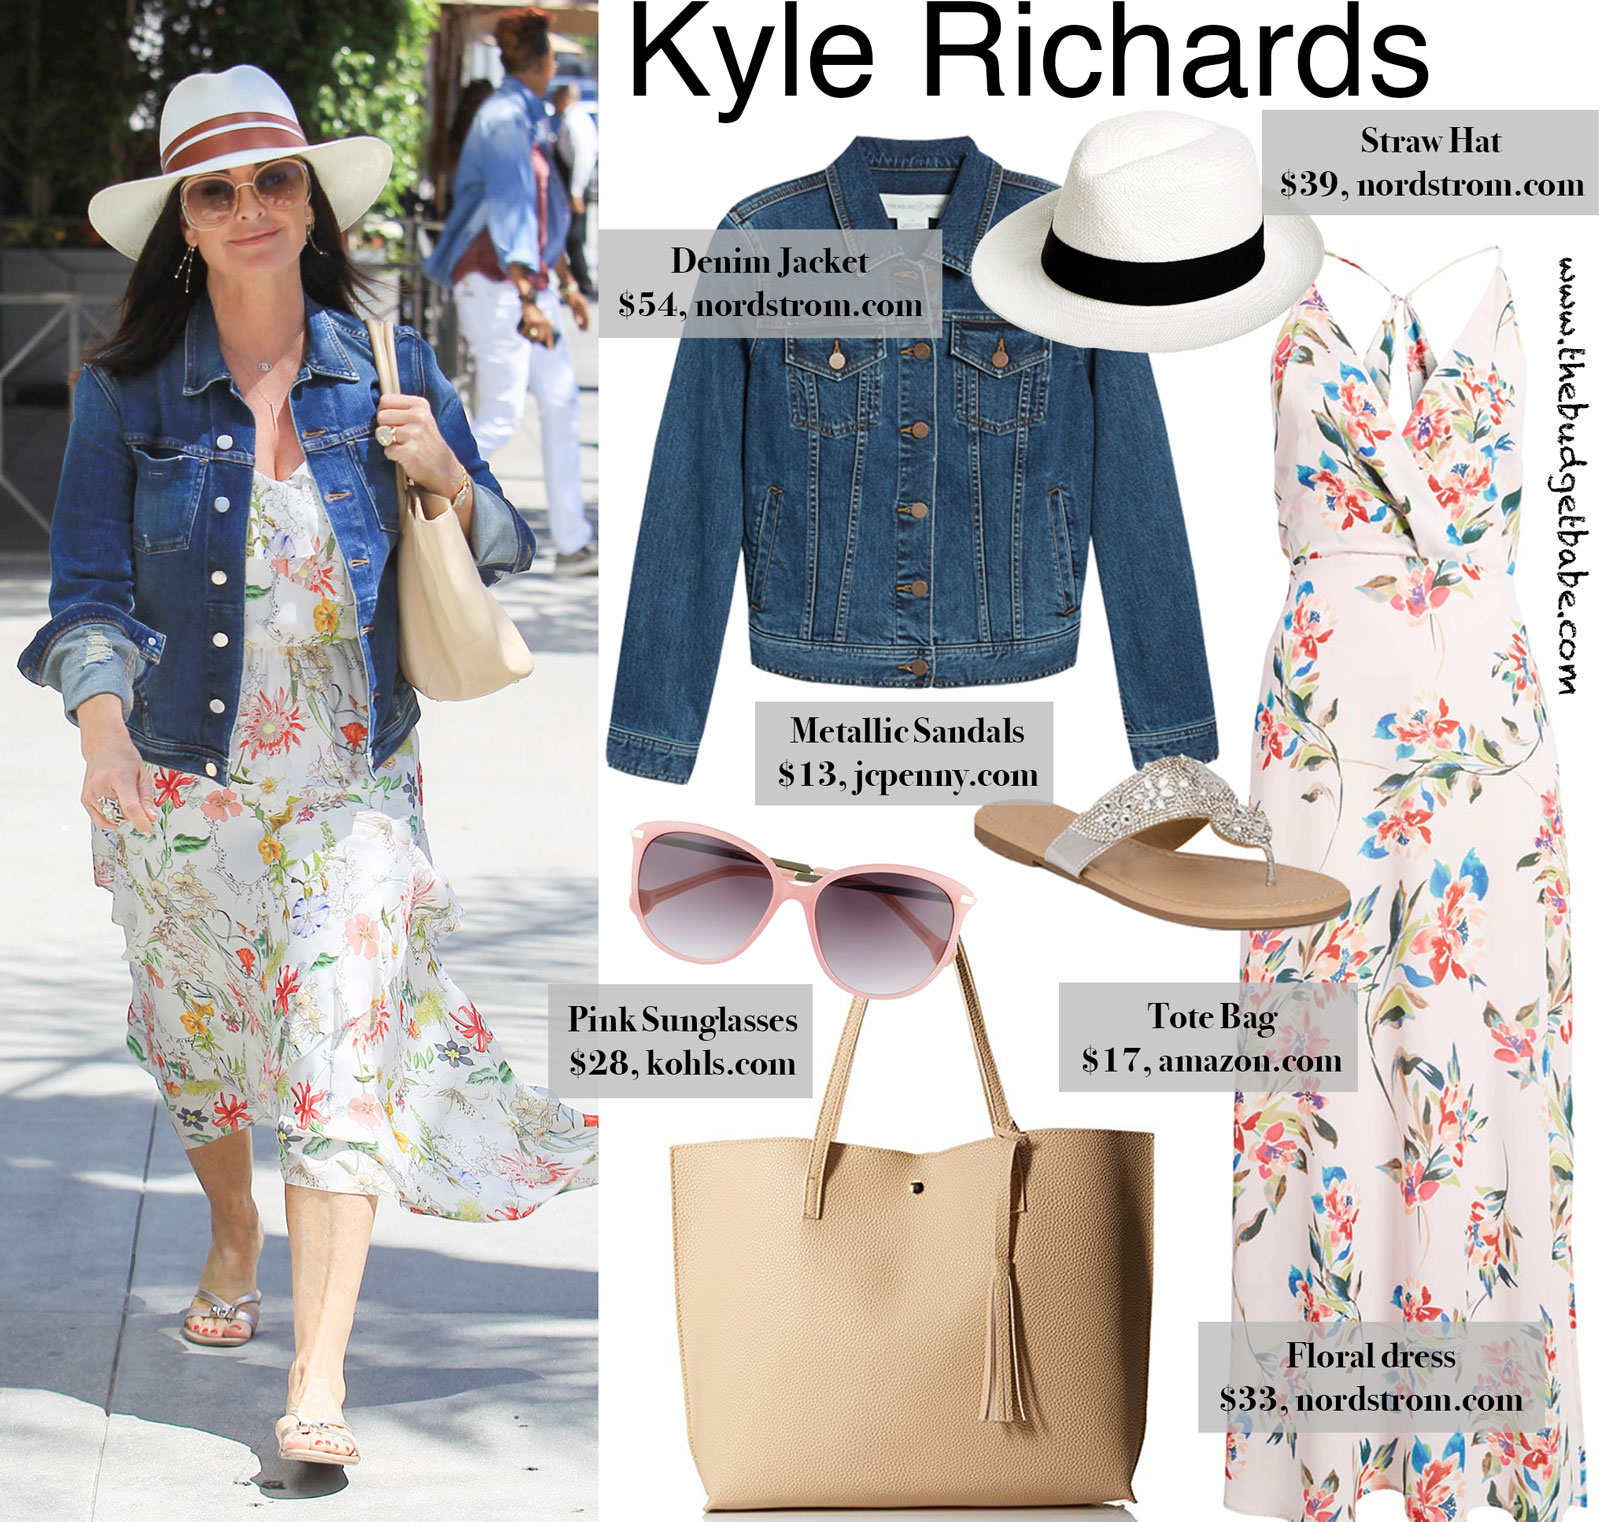 Kyle Richards' Floral Dress Look for Less